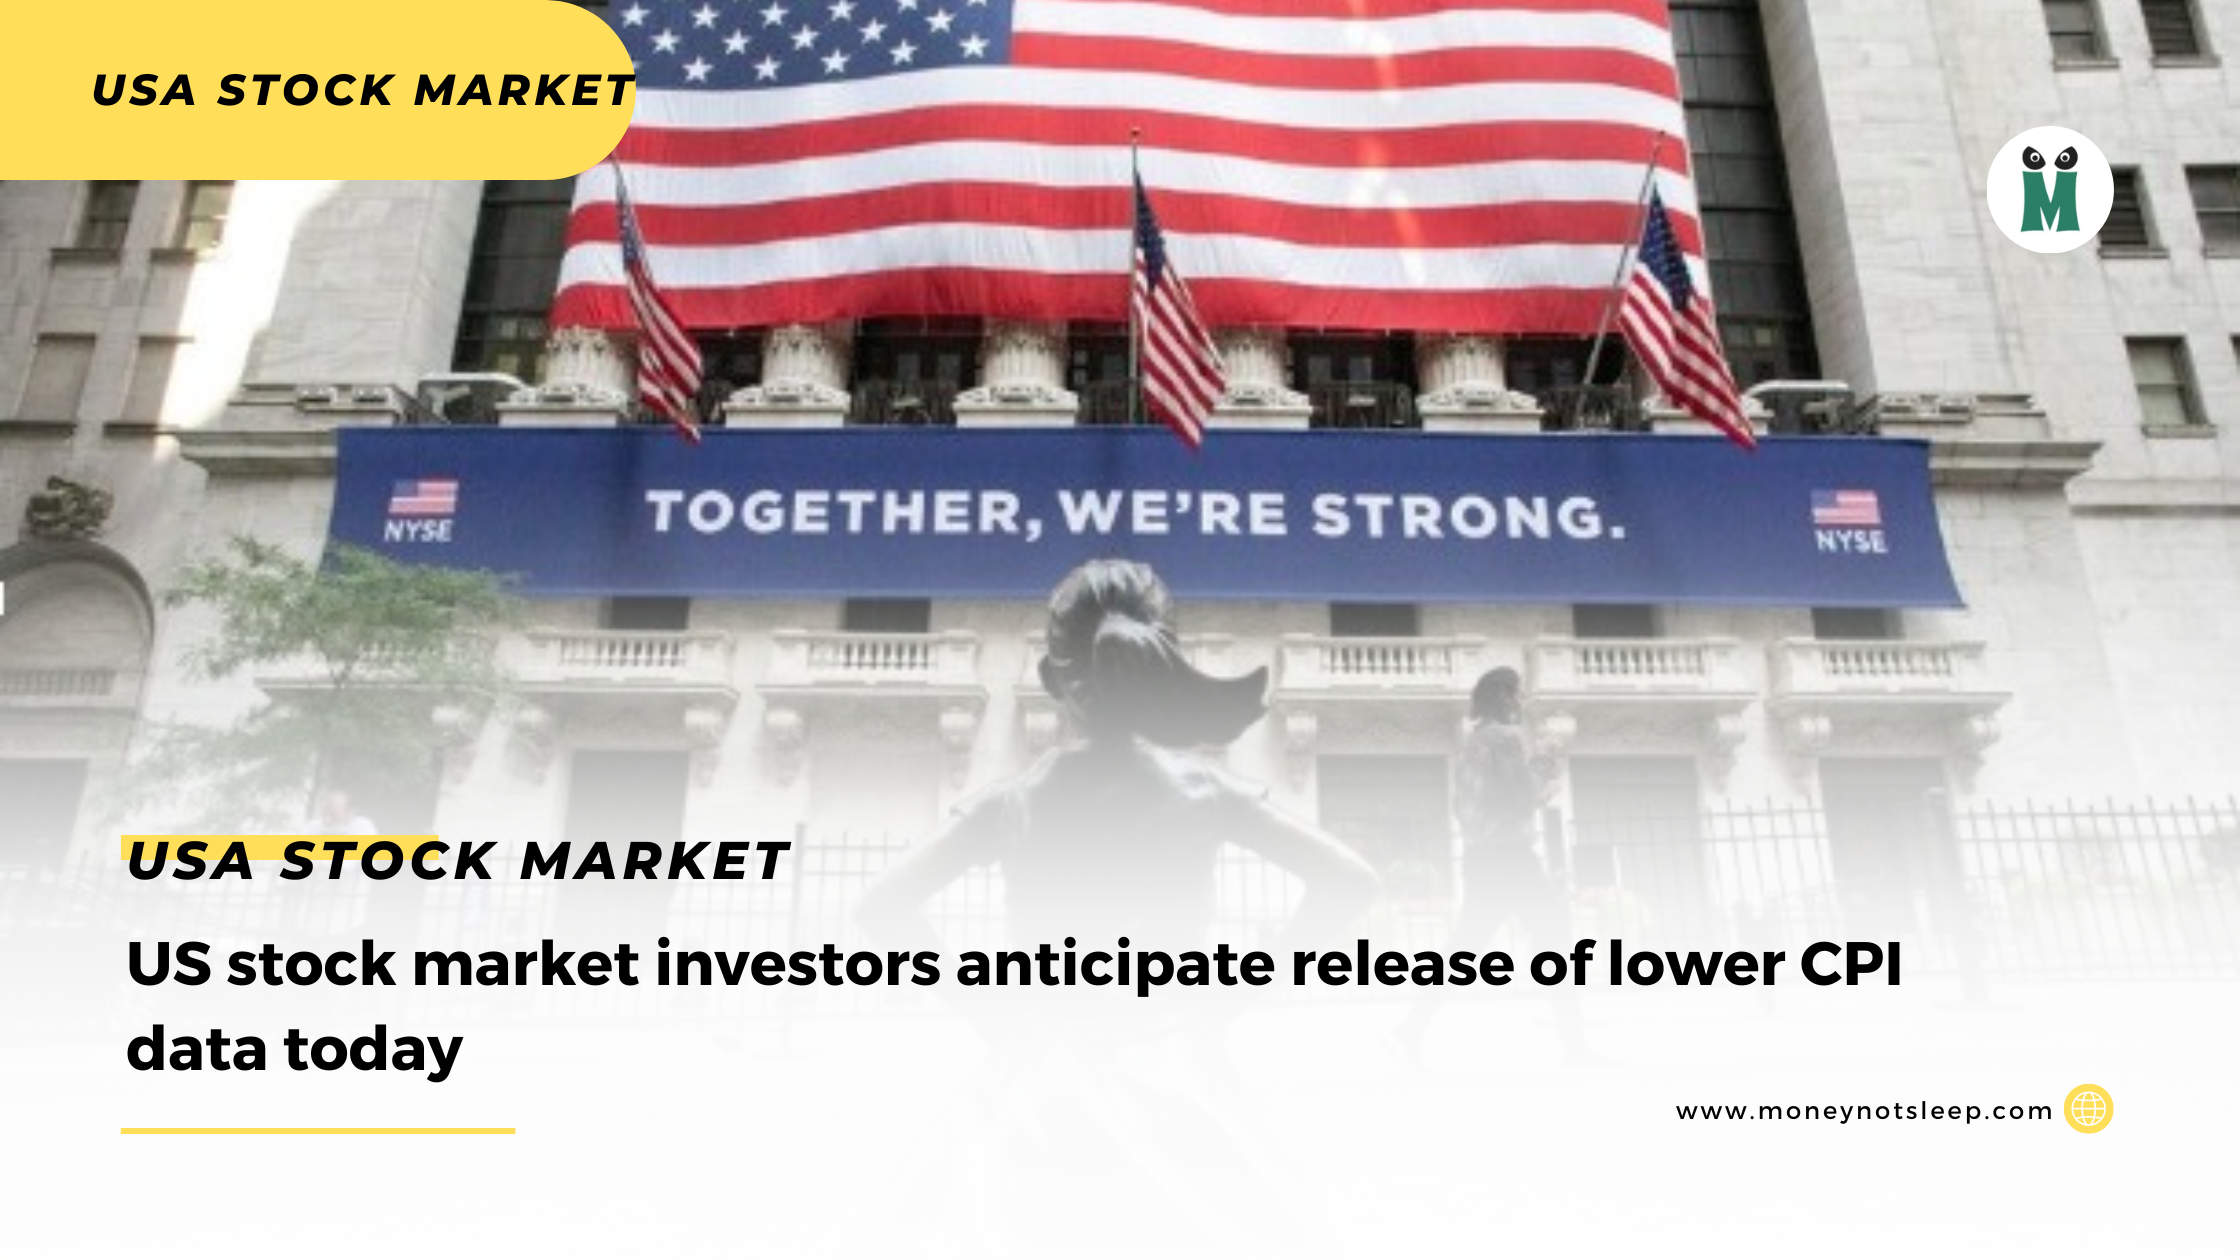 US stock market investors anticipate release of lower CPI data today